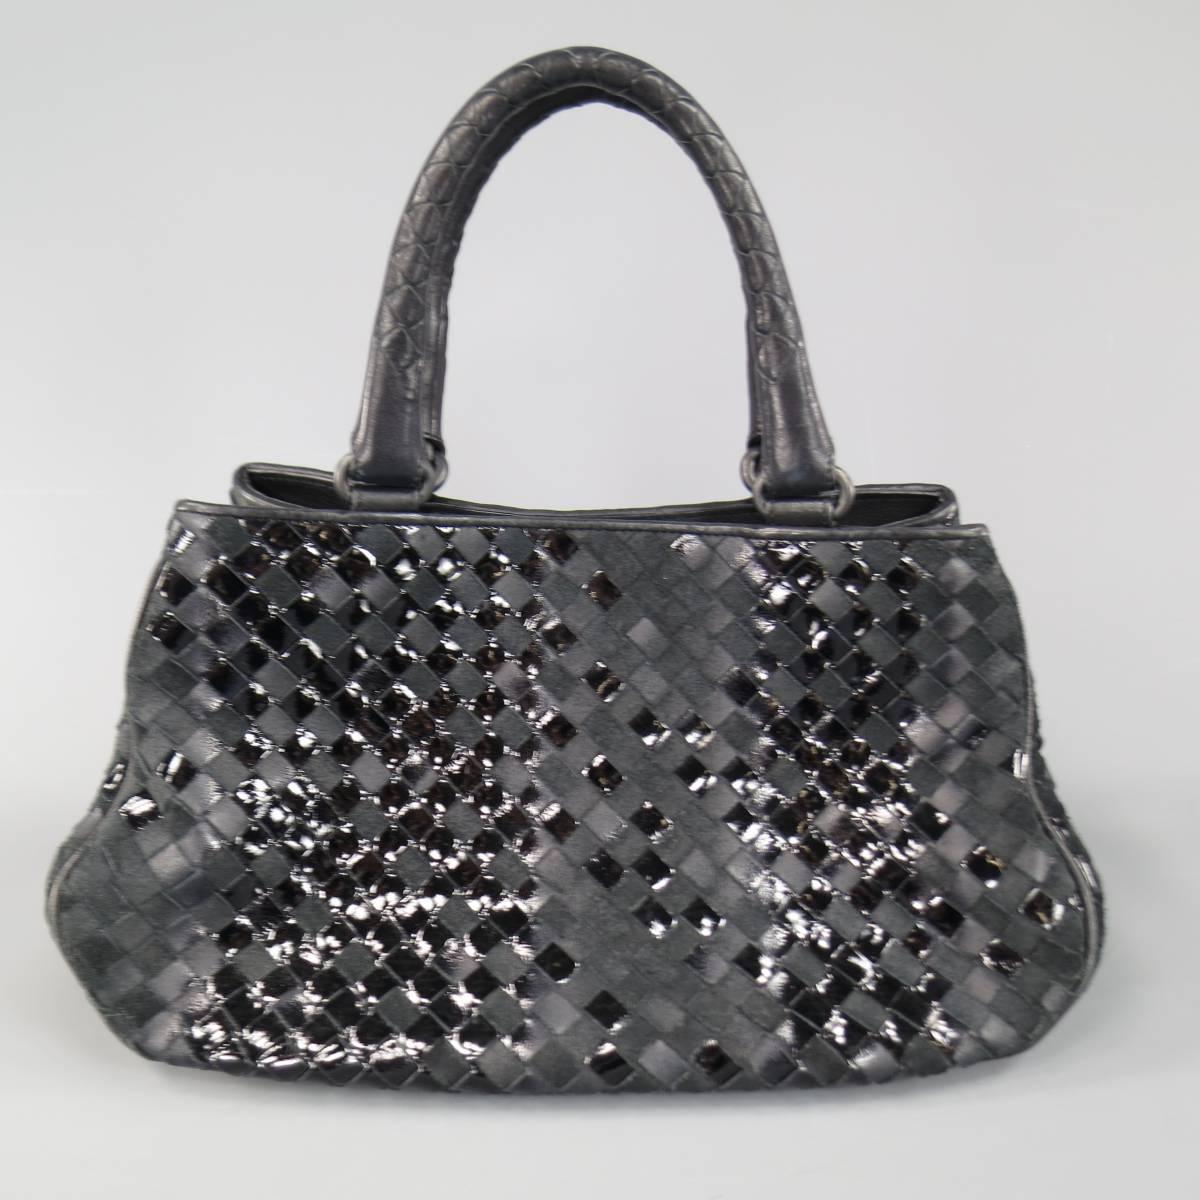 BOTTEGA VENETA Black Leather Suede & Patent Intrecciato Handbag 1